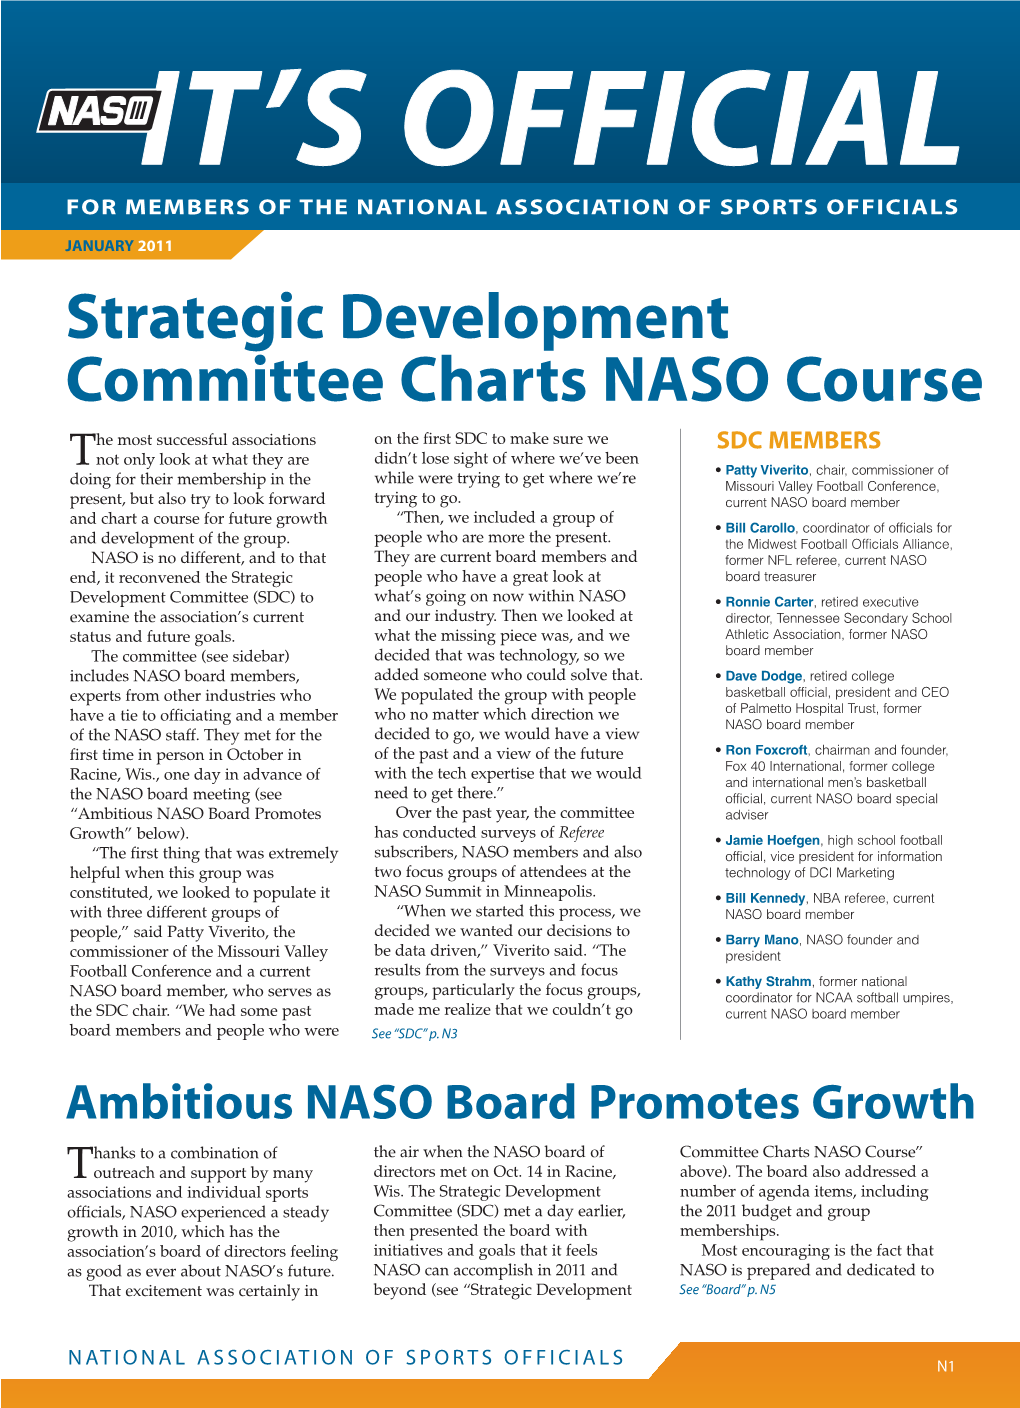 Strategic Development Committee Charts NASO Course